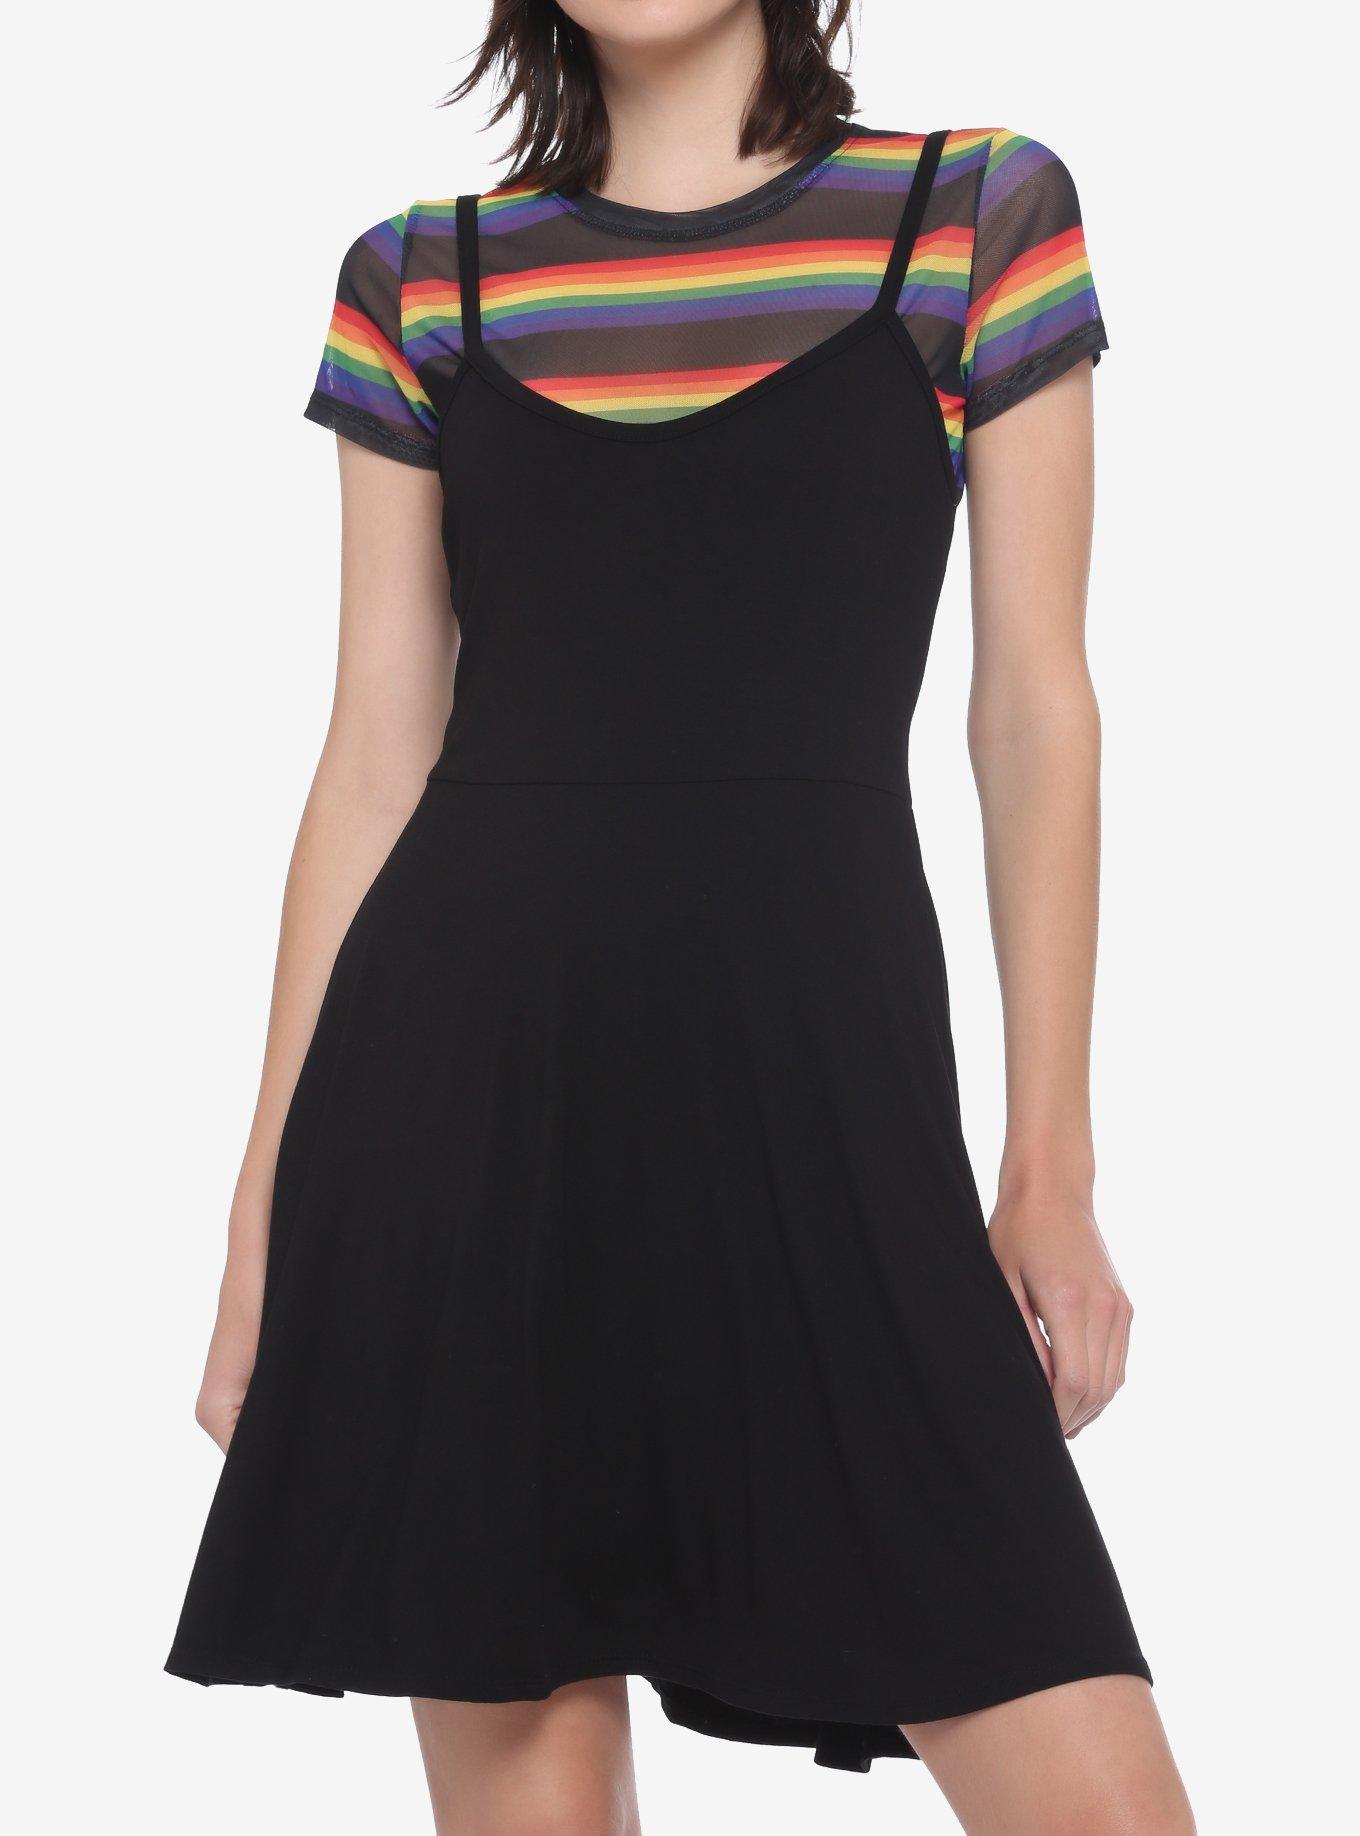 Rainbow Mesh Black Layered Skater Dress, BLACK, hi-res